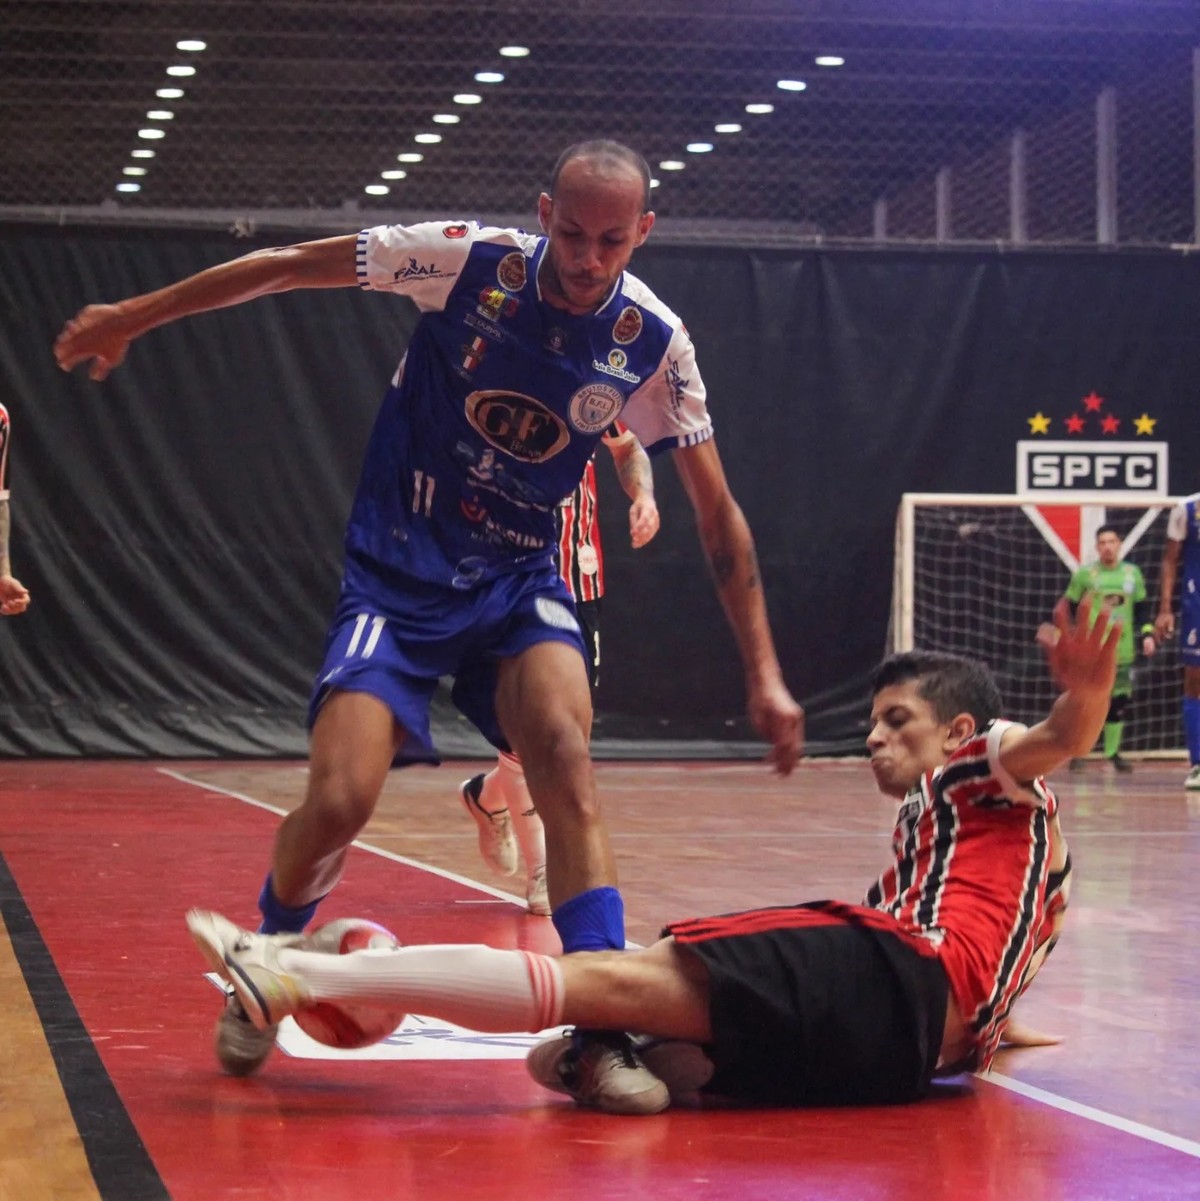 Brutos é eliminado do Campeonato Paulista de Futsal